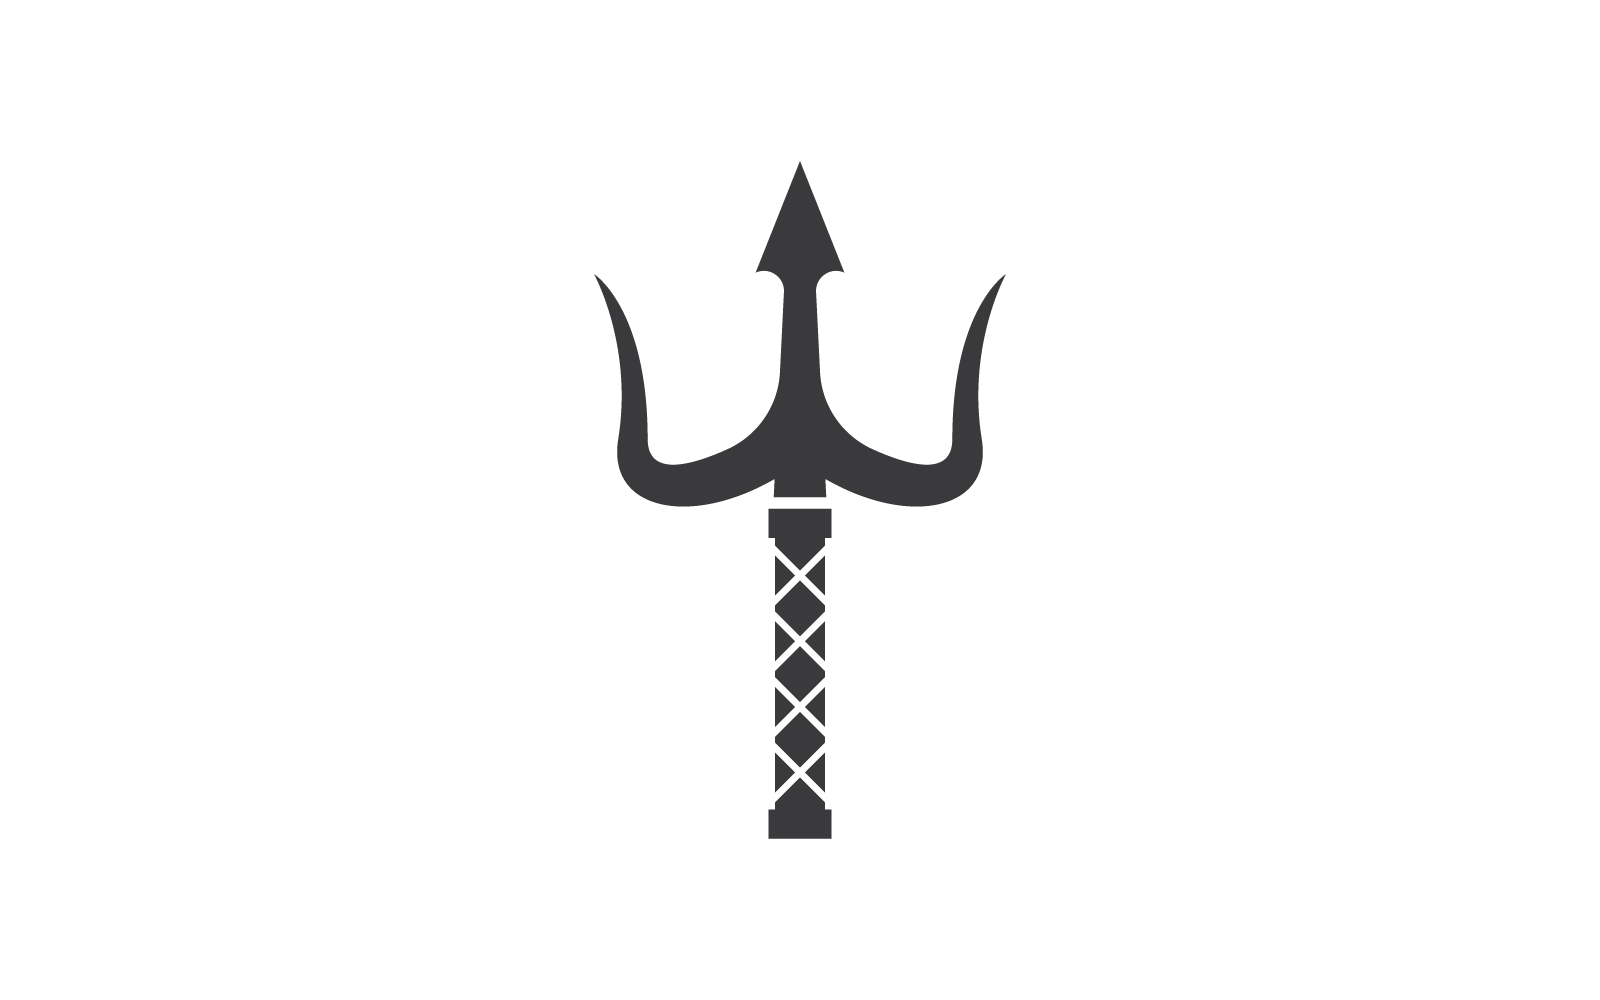 Trident et couronne logo illustration design plat